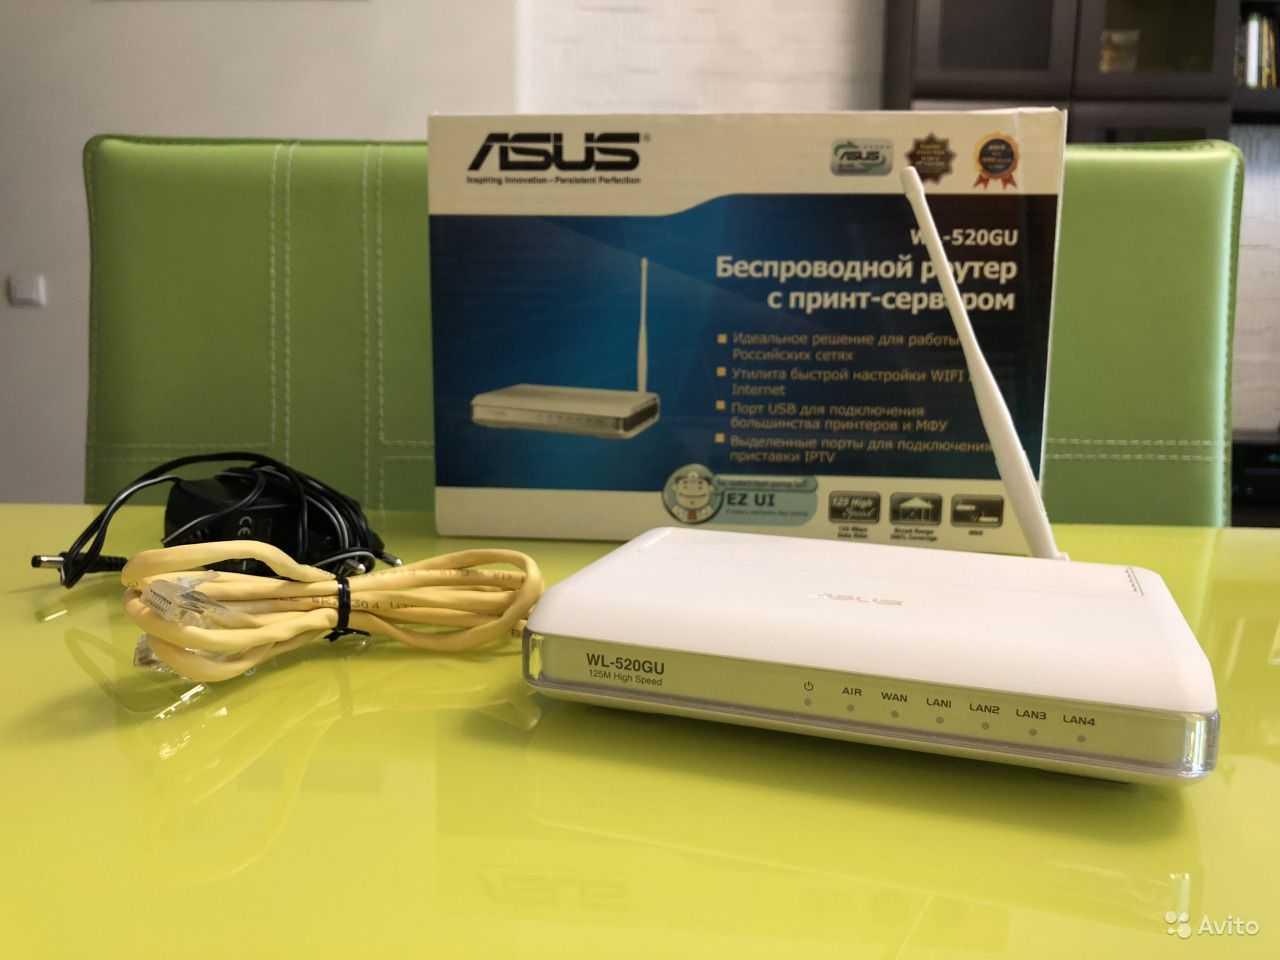 Адаптер wifi asus wl-160w — купить, цена и характеристики, отзывы